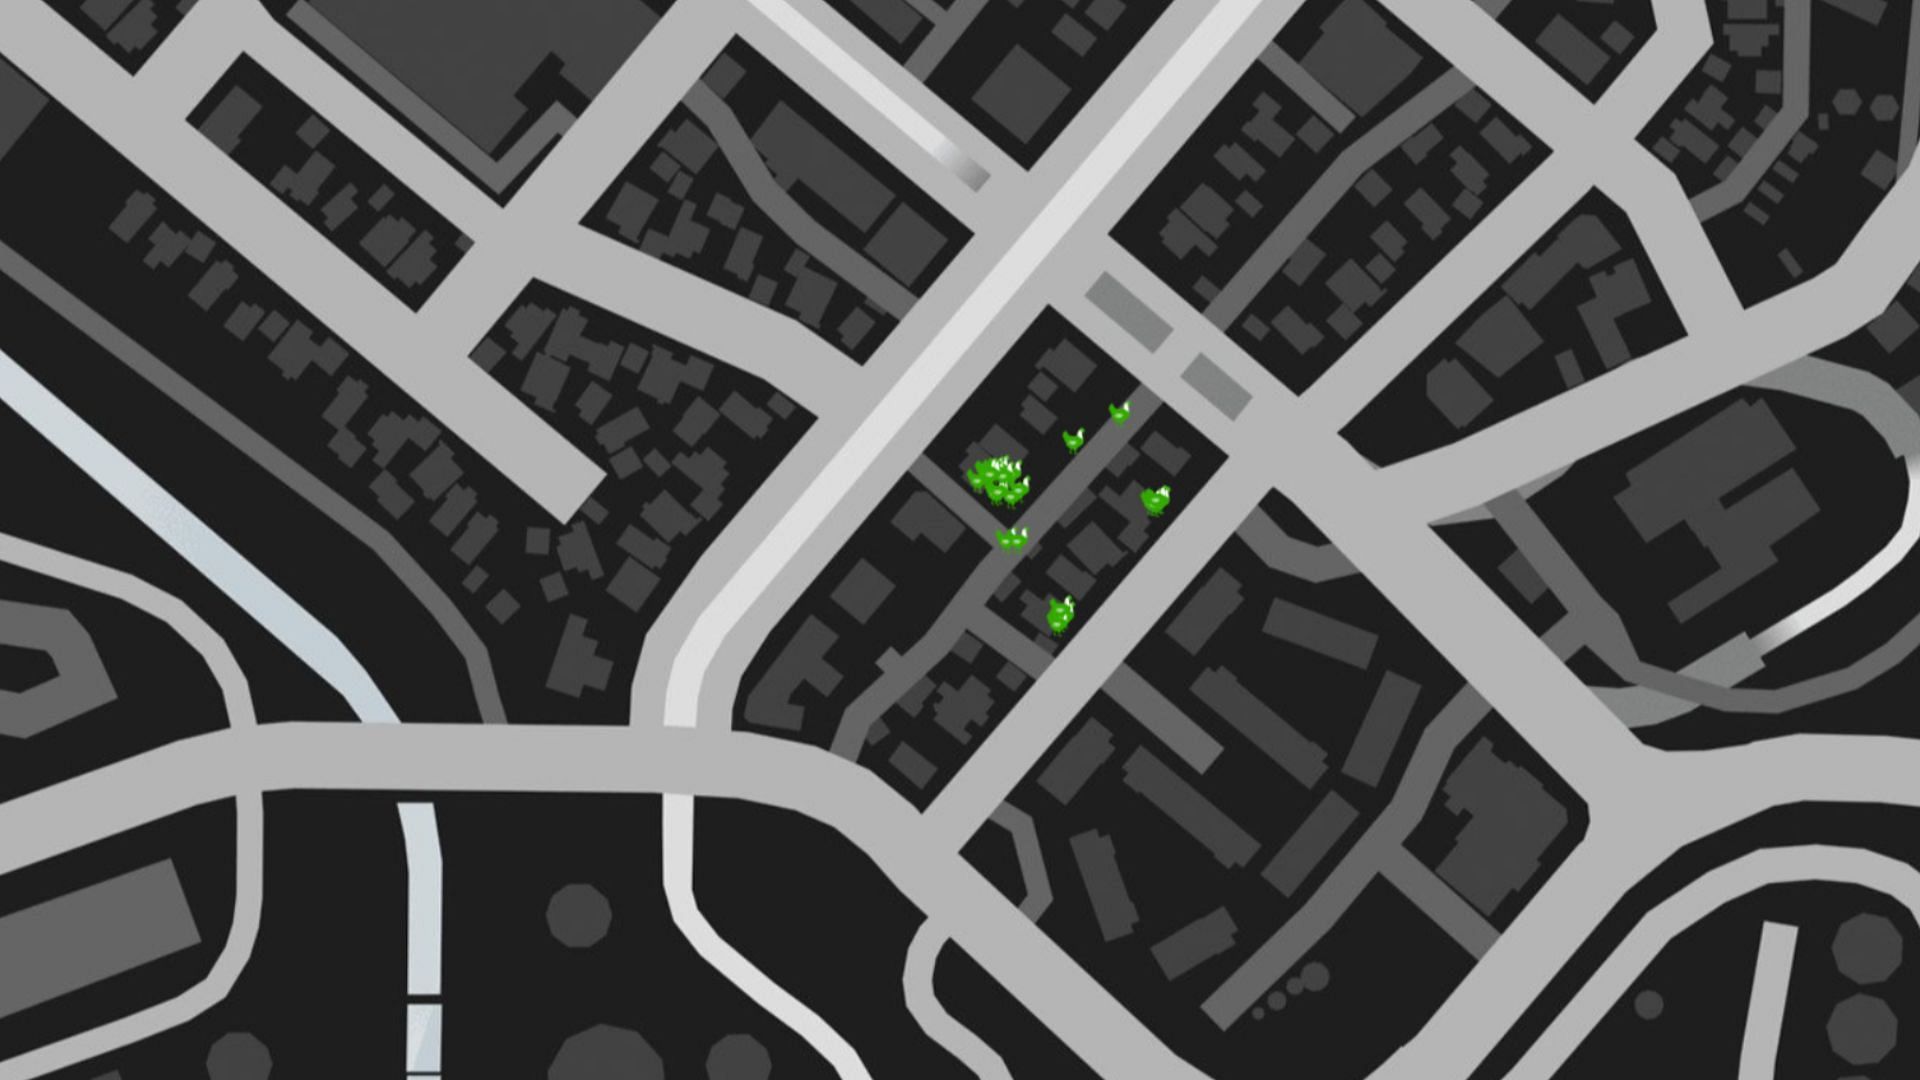 Grand Theft Auto Online Hen locations in Rancho (Image via GTAWeb.eu)